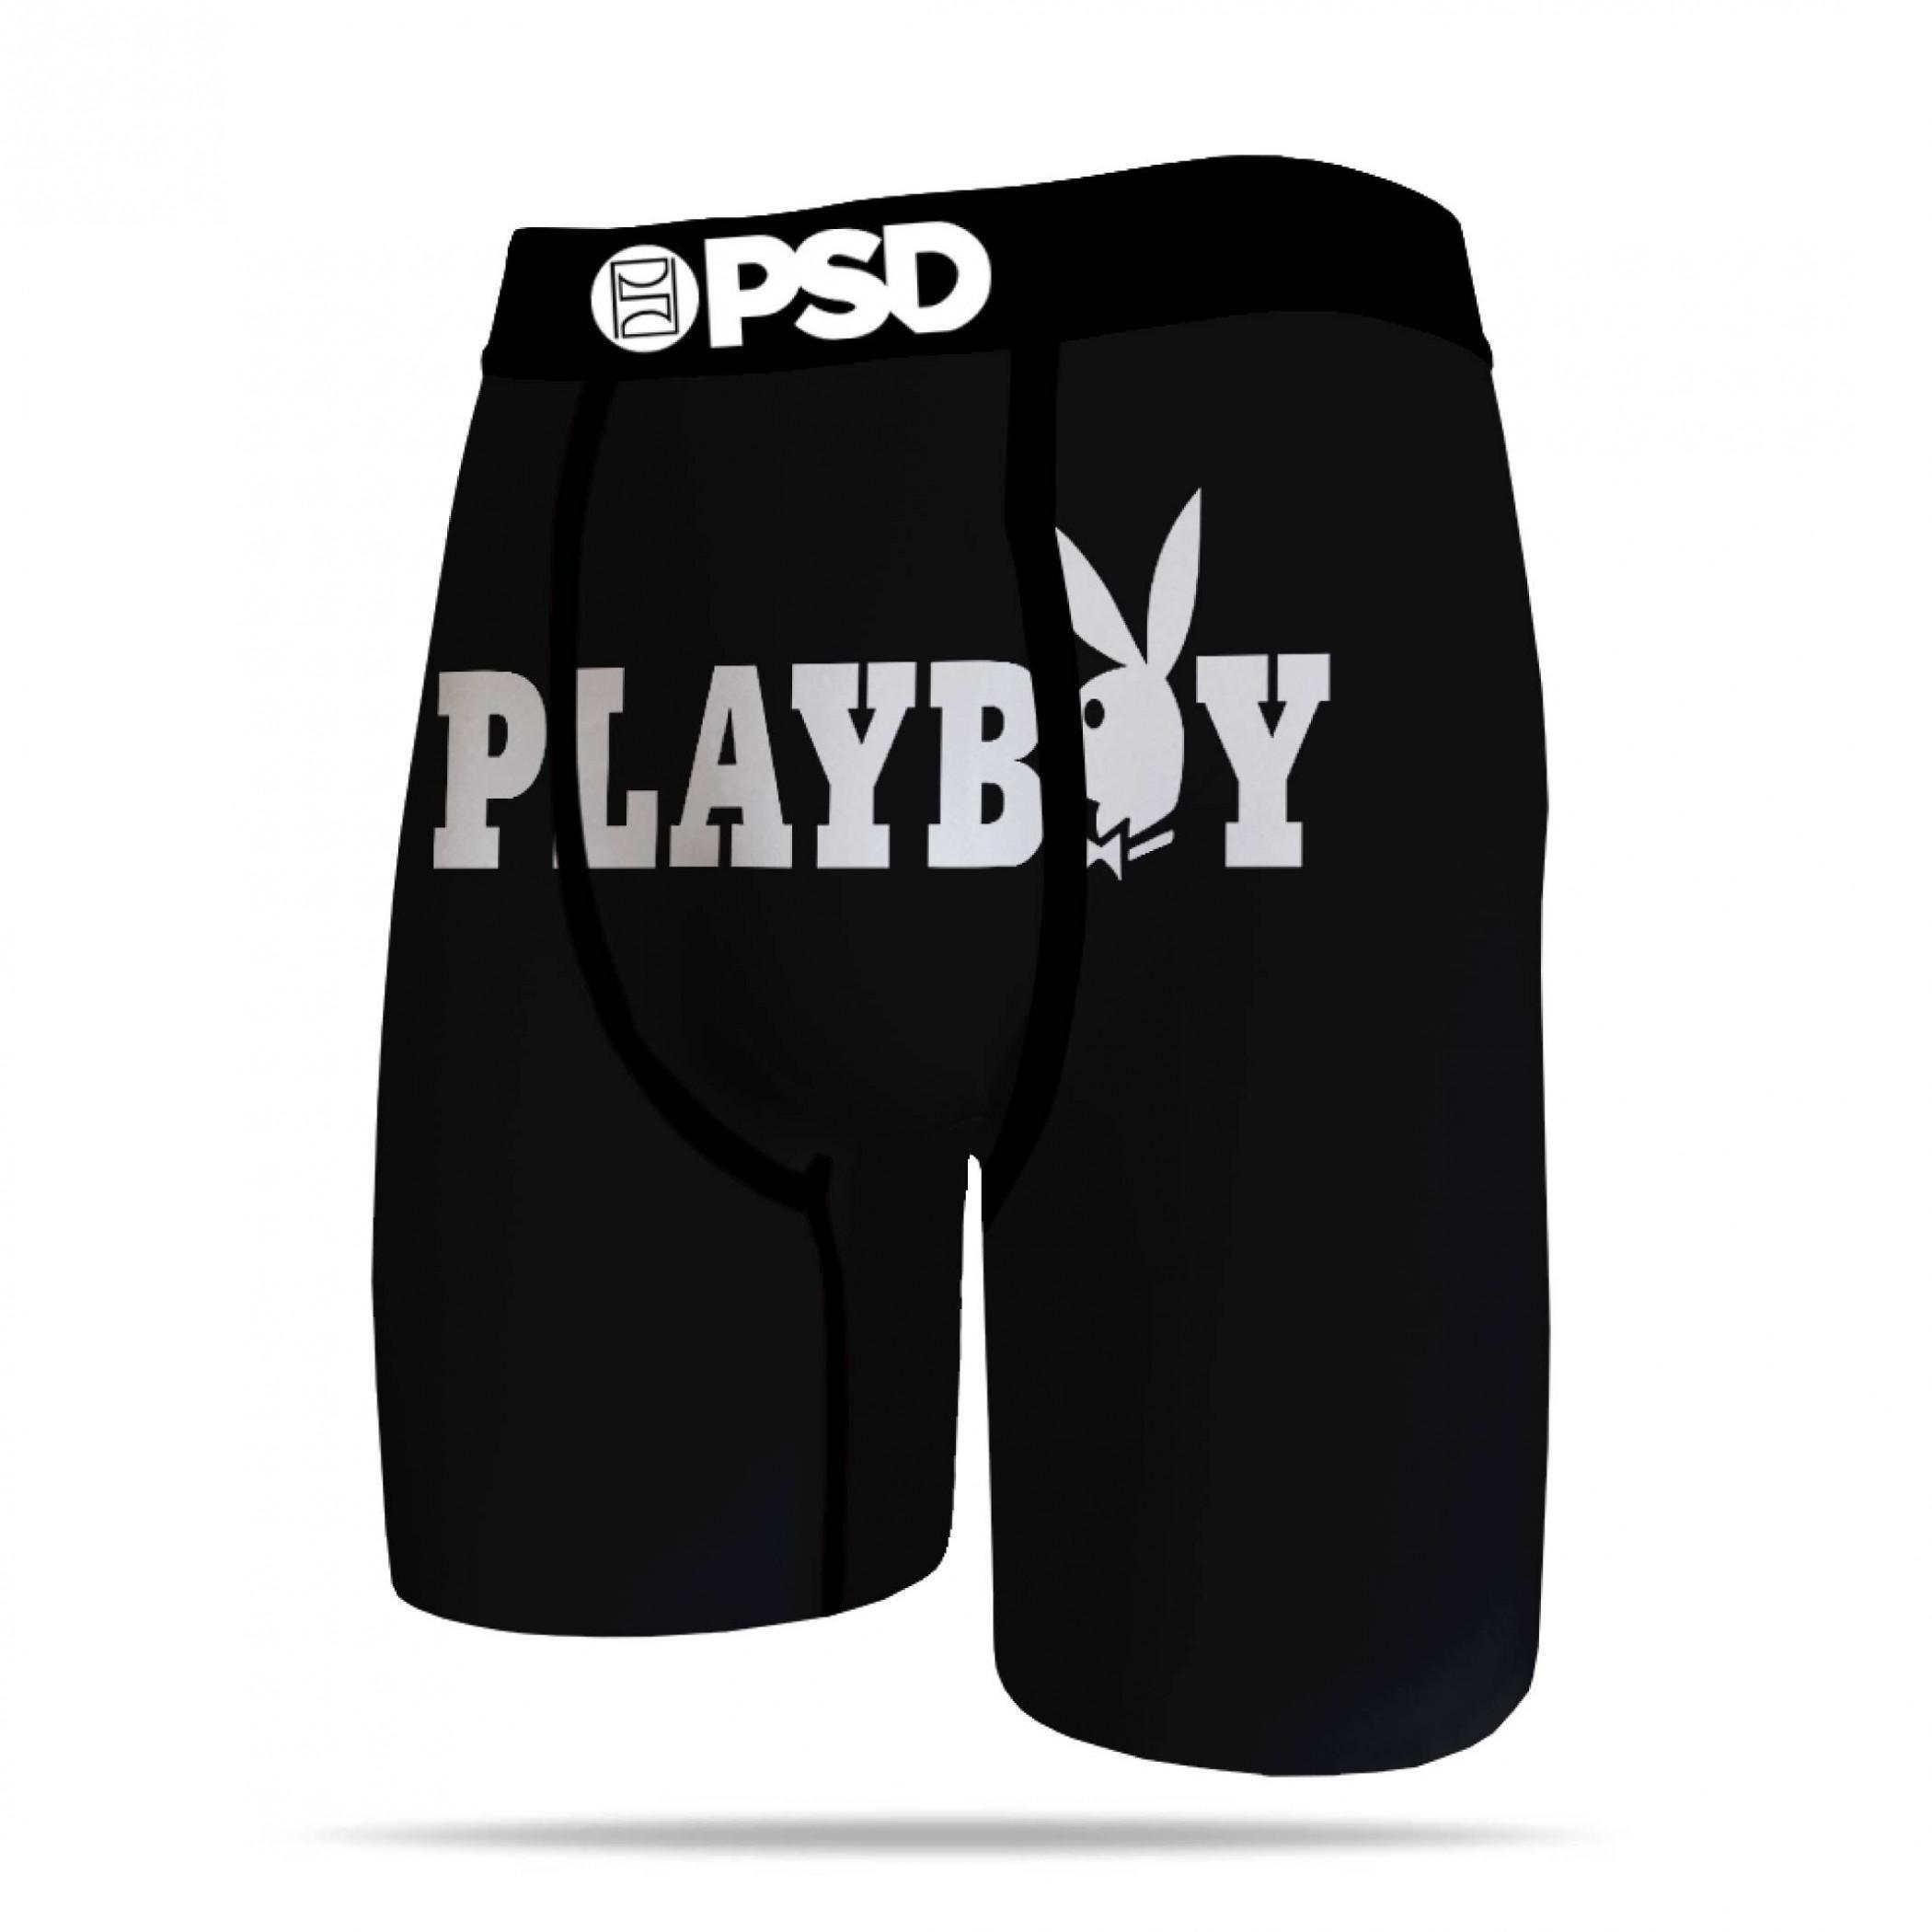 Playboy Bunny Mascot Logo Men's PSD Boxer Briefs XXLarge (44-46)